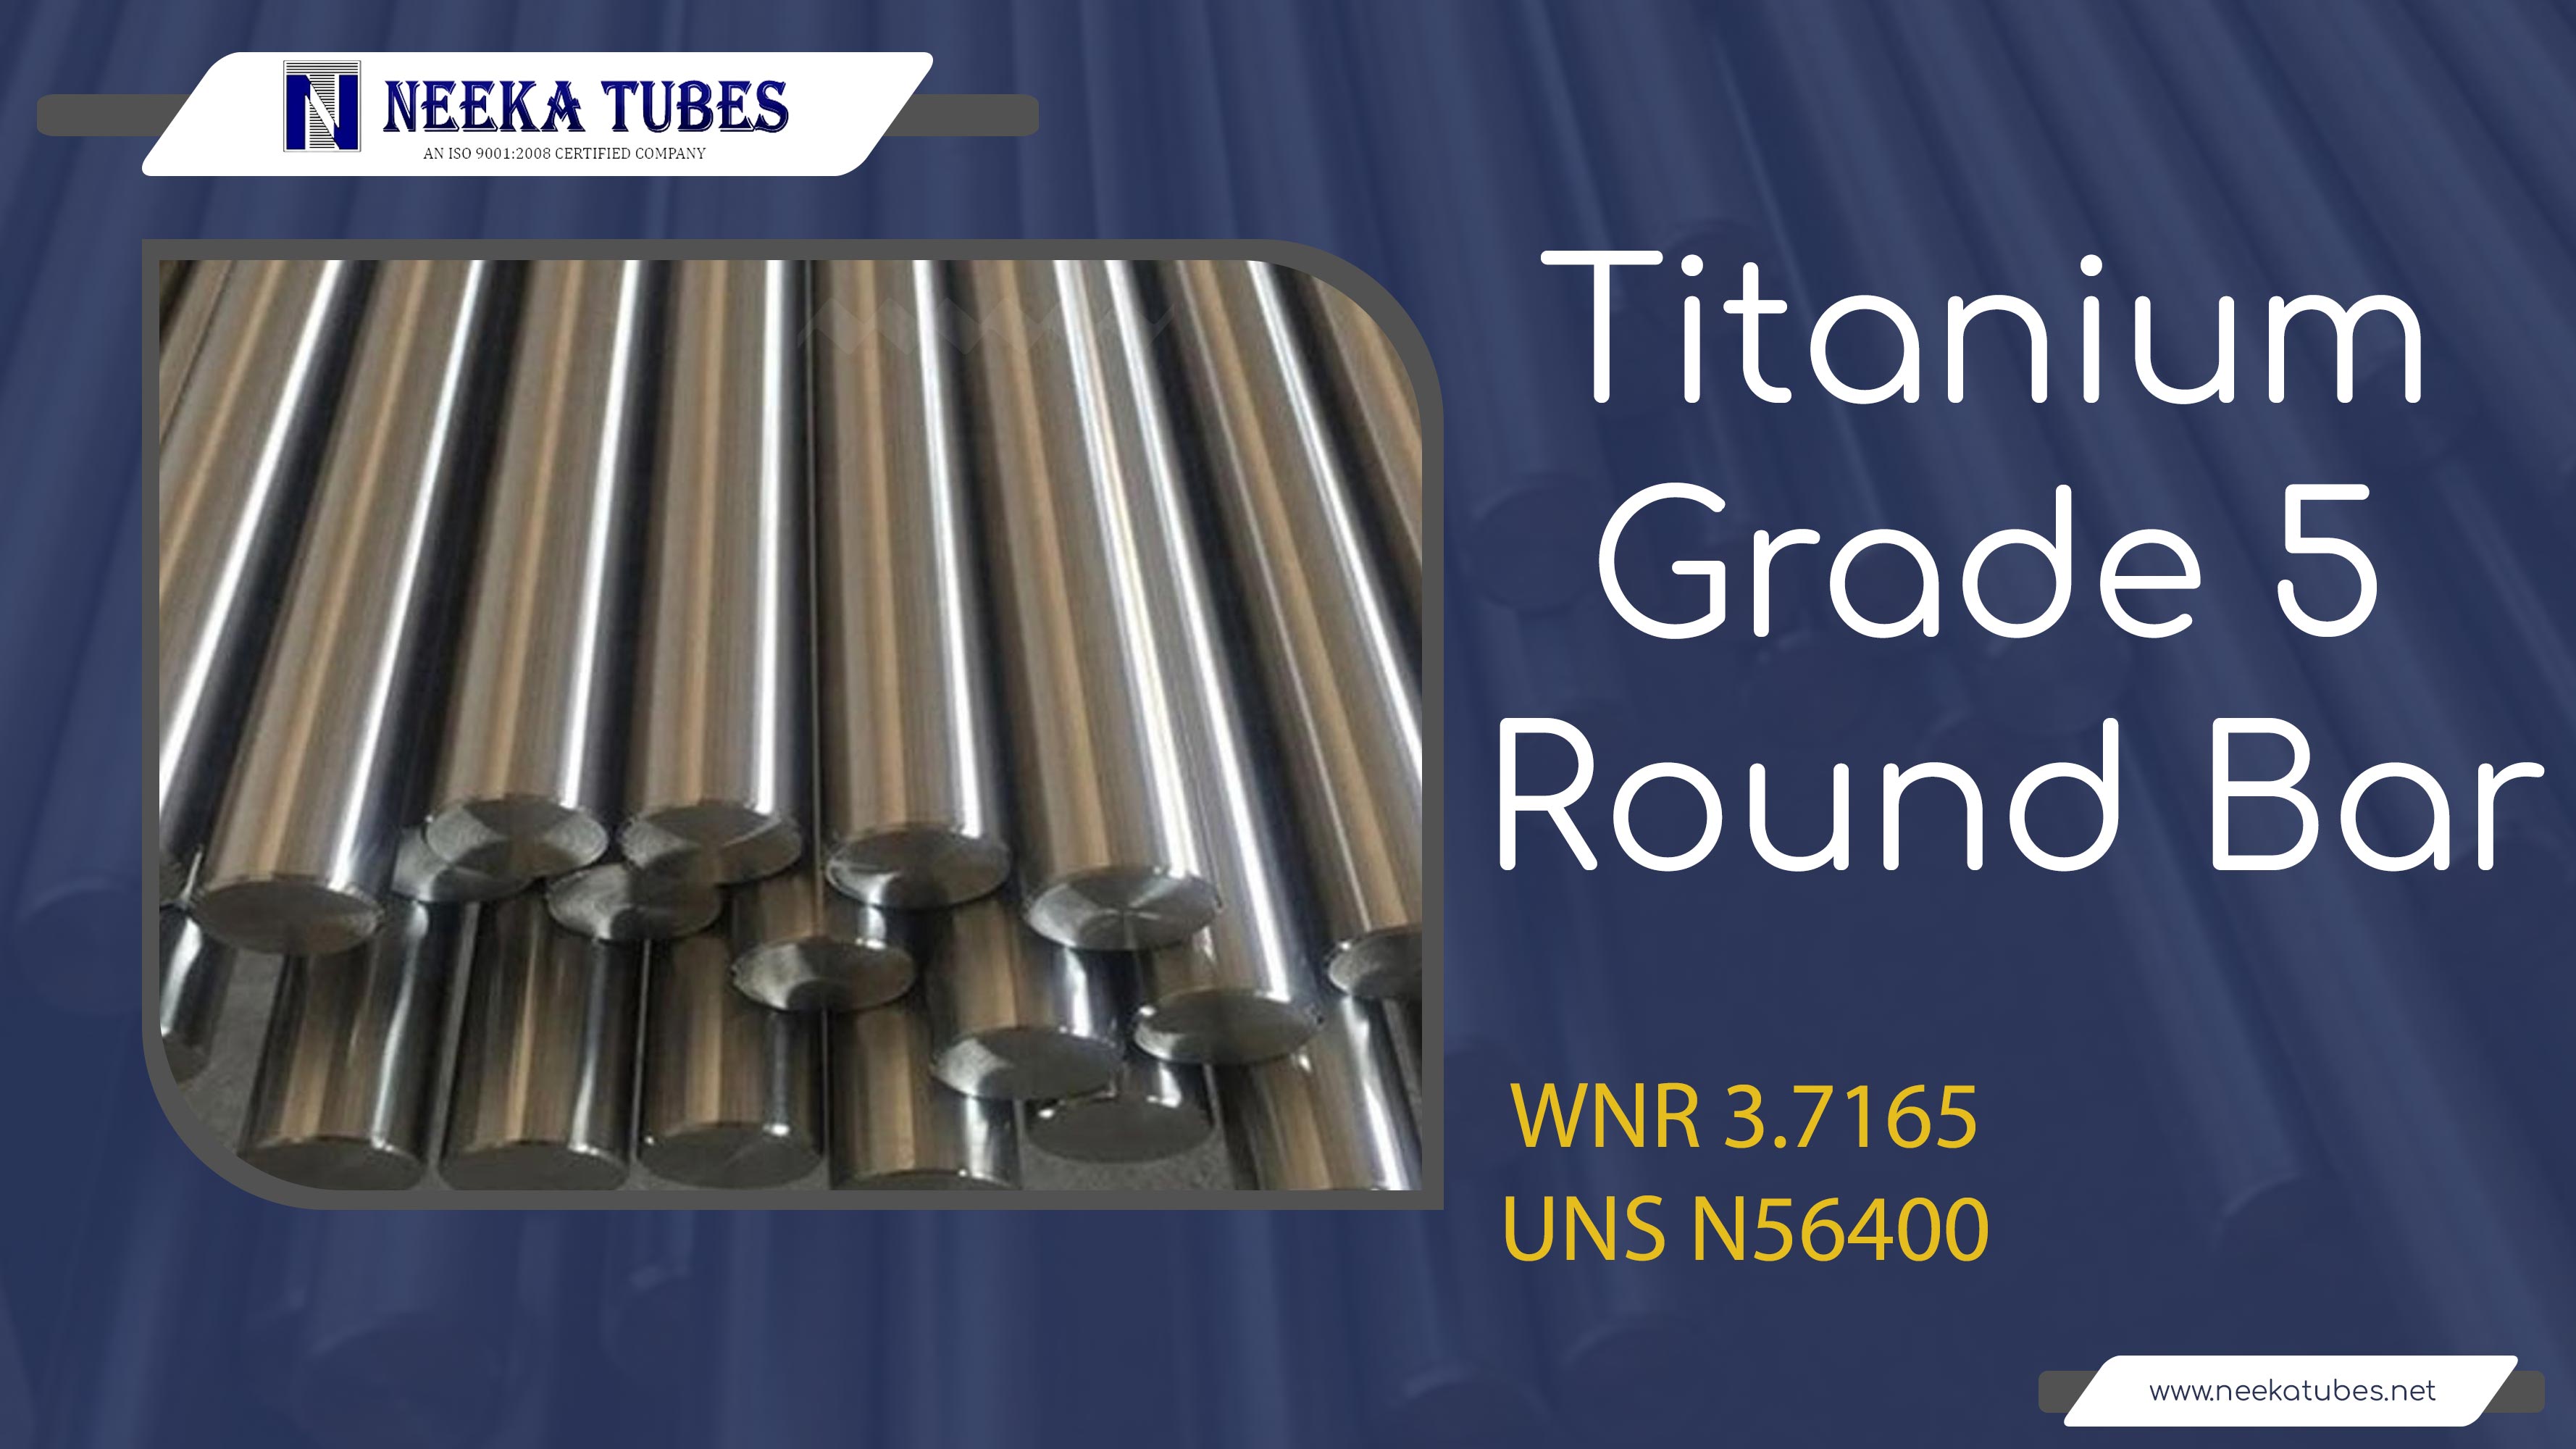 Tittanium grade 5 round bar